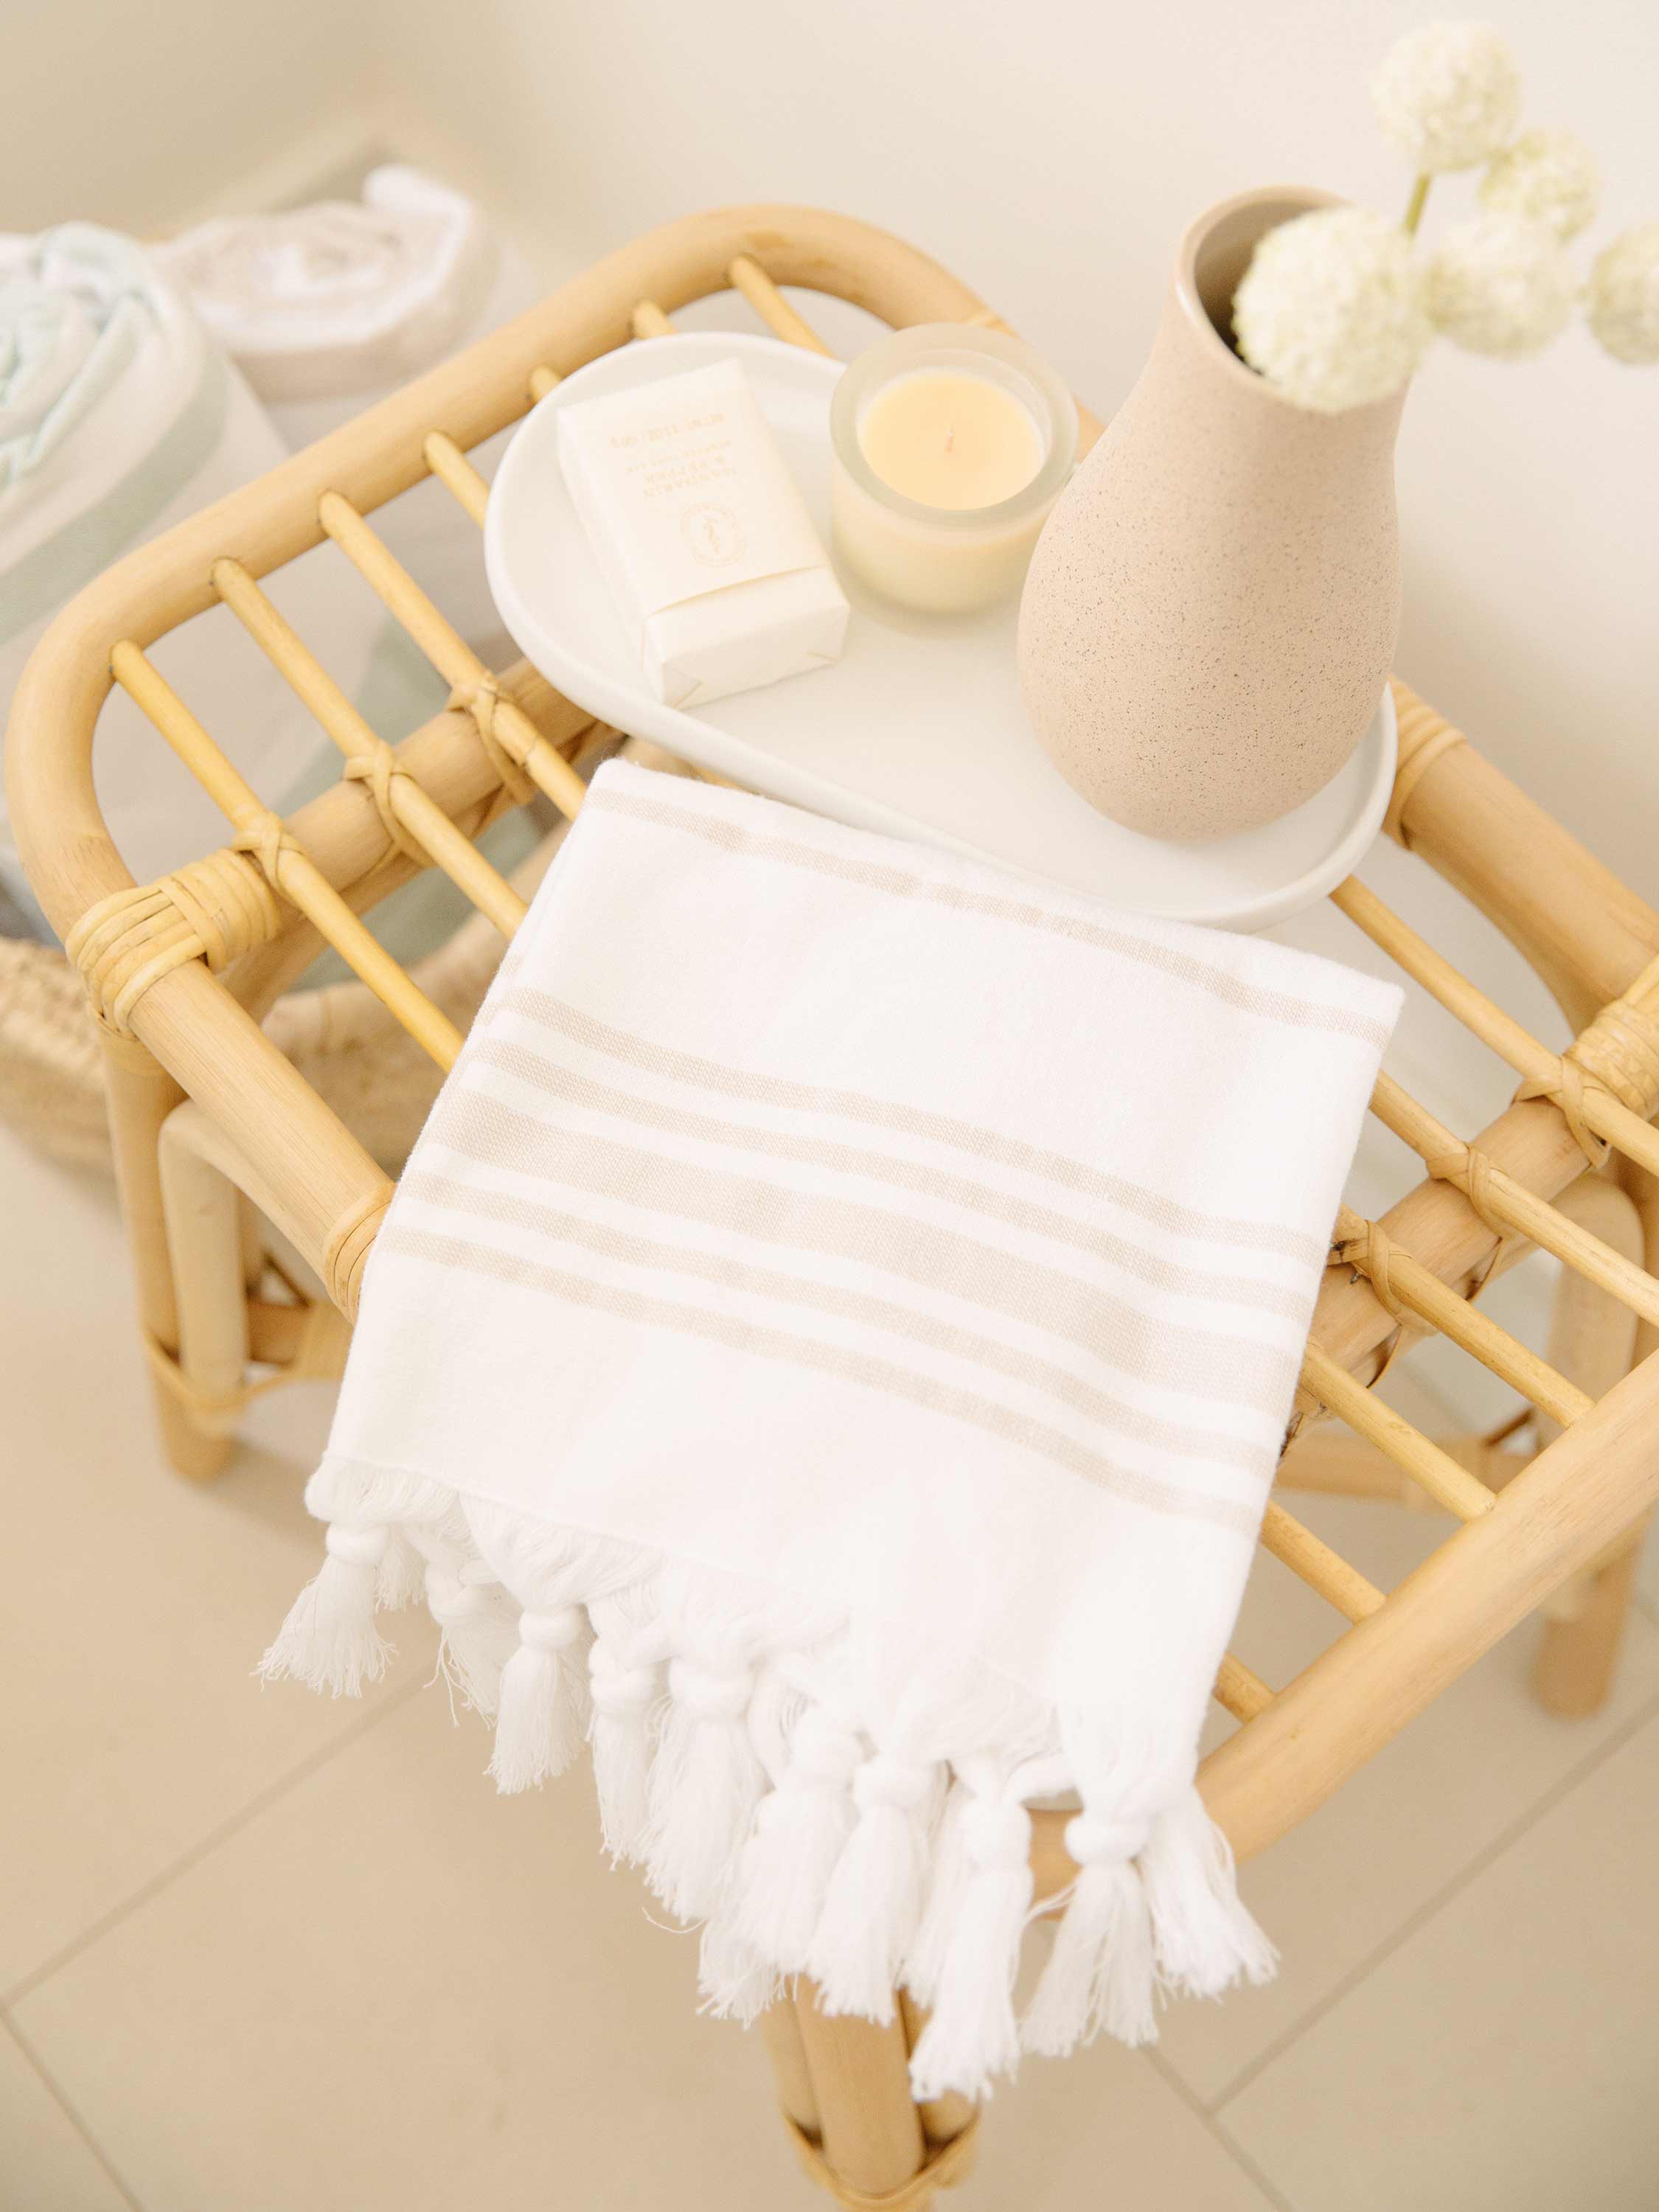 Classic Turkish Cotton Hand Towel in Bone | Aerocotton | Made in Turkey | Parachute